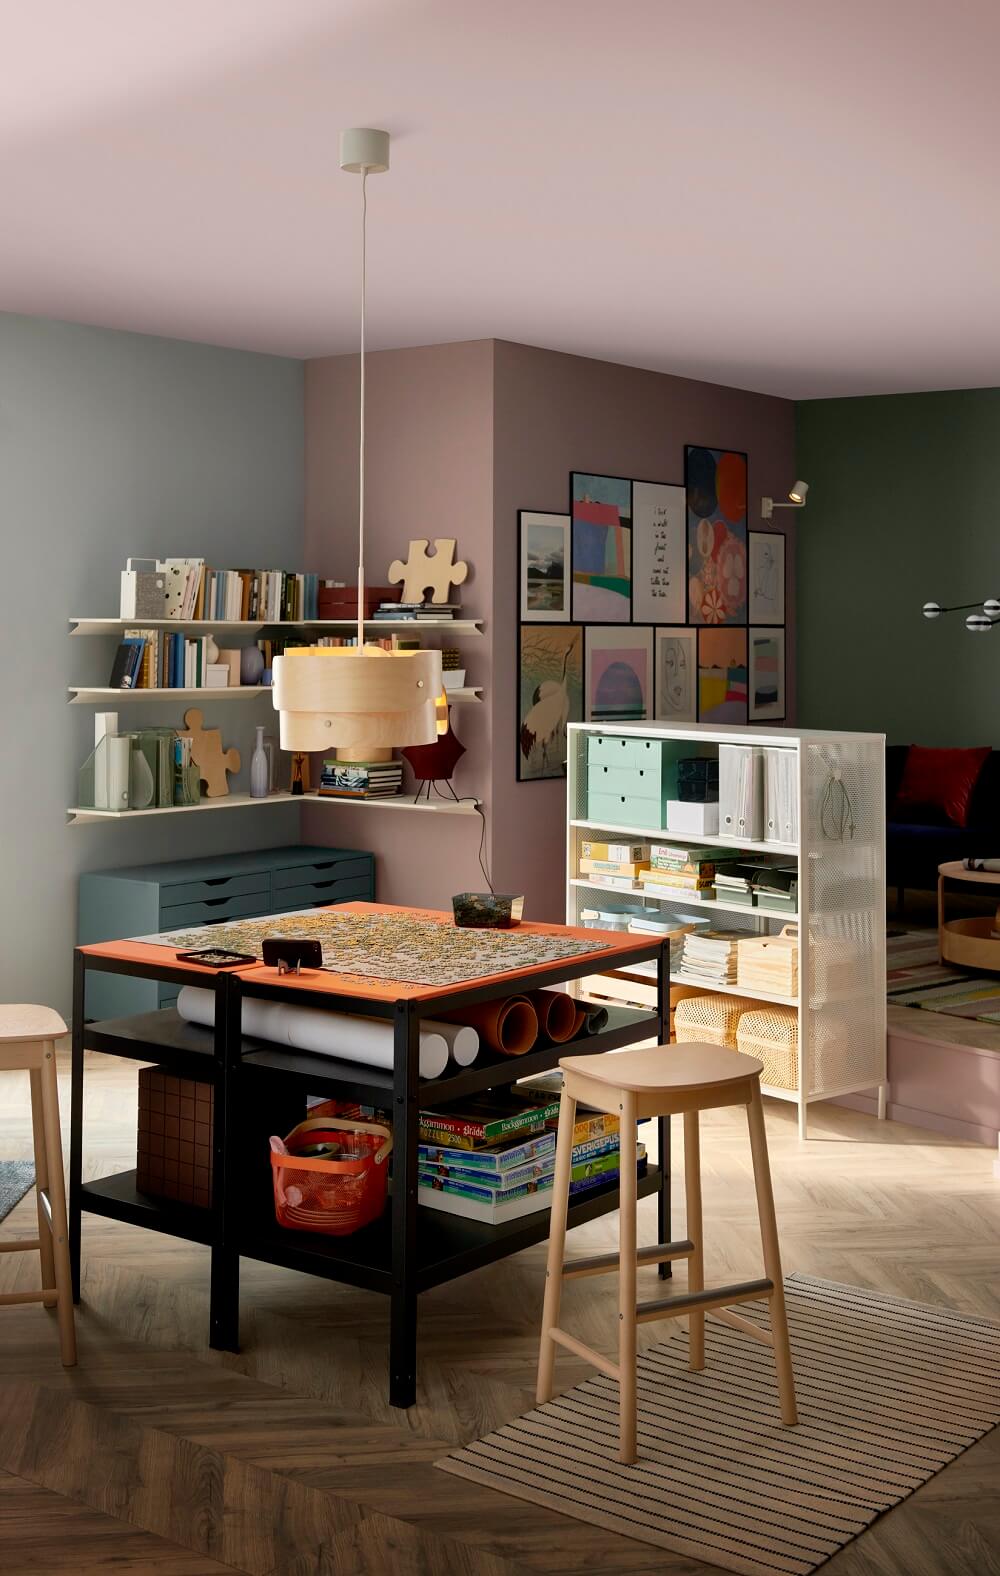 IKEA Spring Catalog: Colorful Decor + Storage Solutions